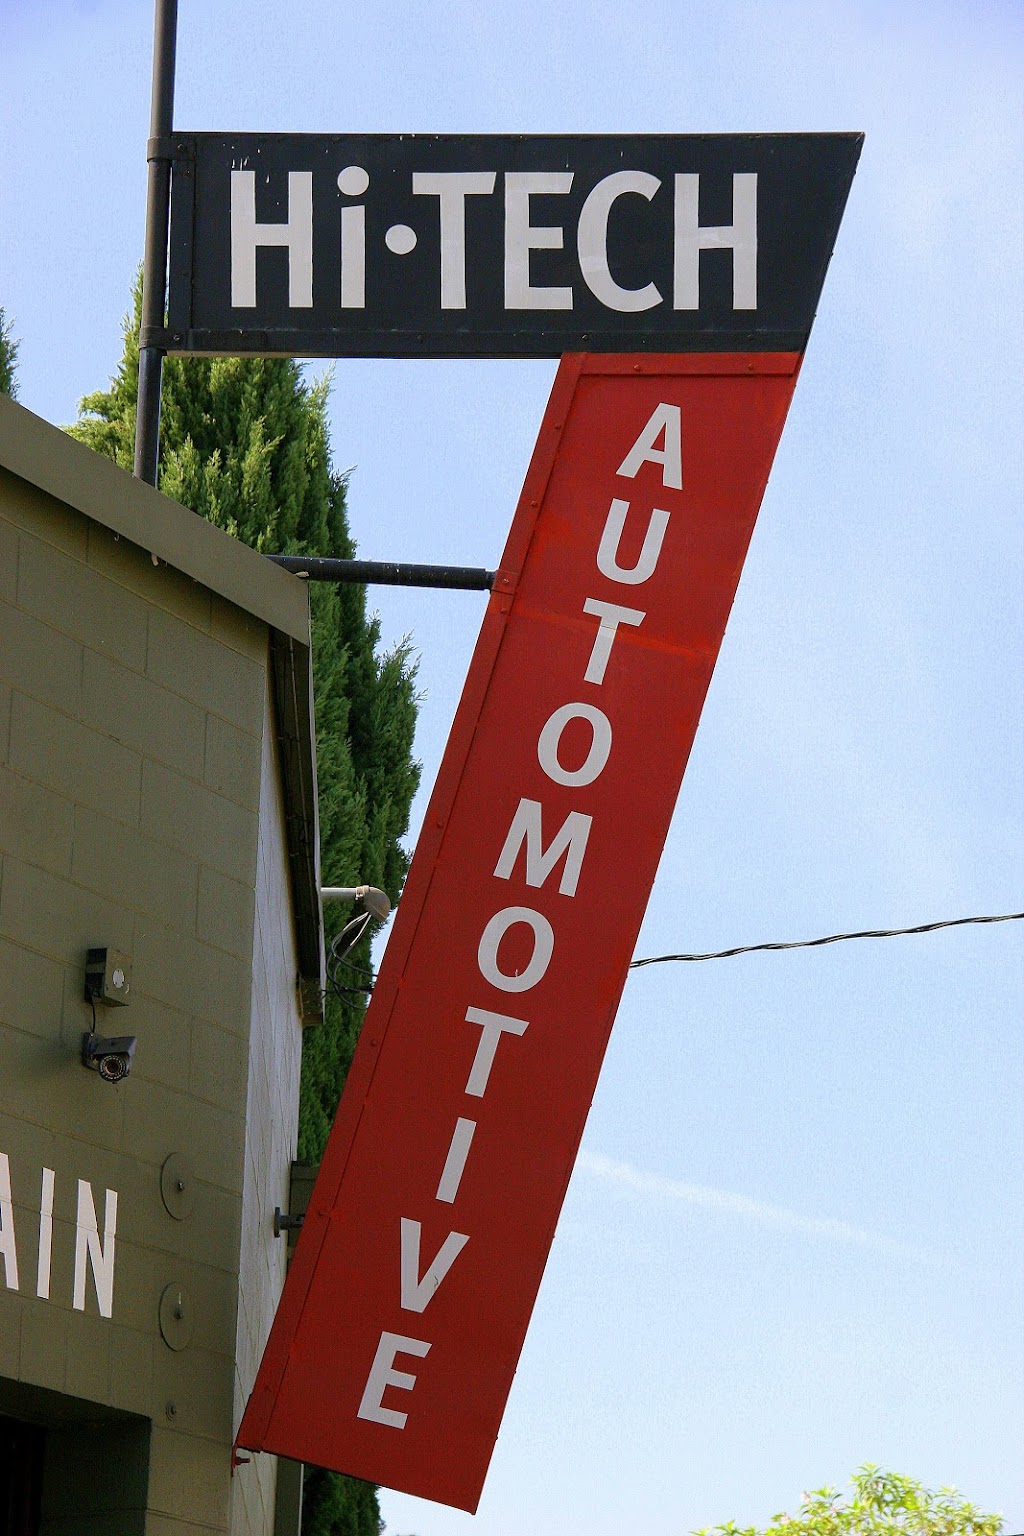 Hi Tech Automotive | 4000 Fountain Ave, Los Angeles, CA 90029, USA | Phone: (323) 661-2788